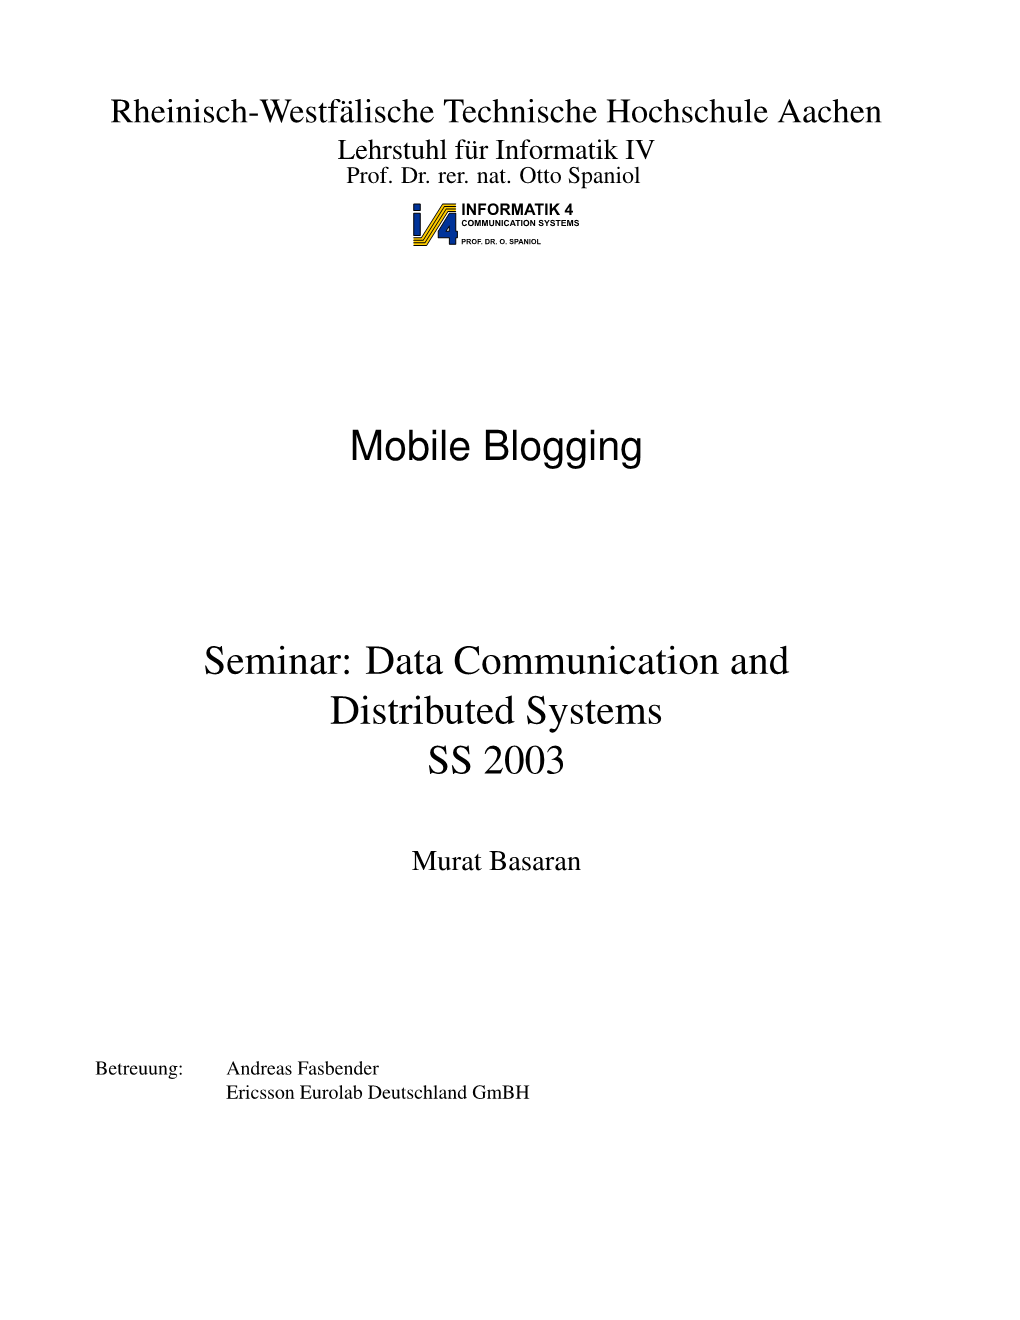 Mobile Blogging Seminar